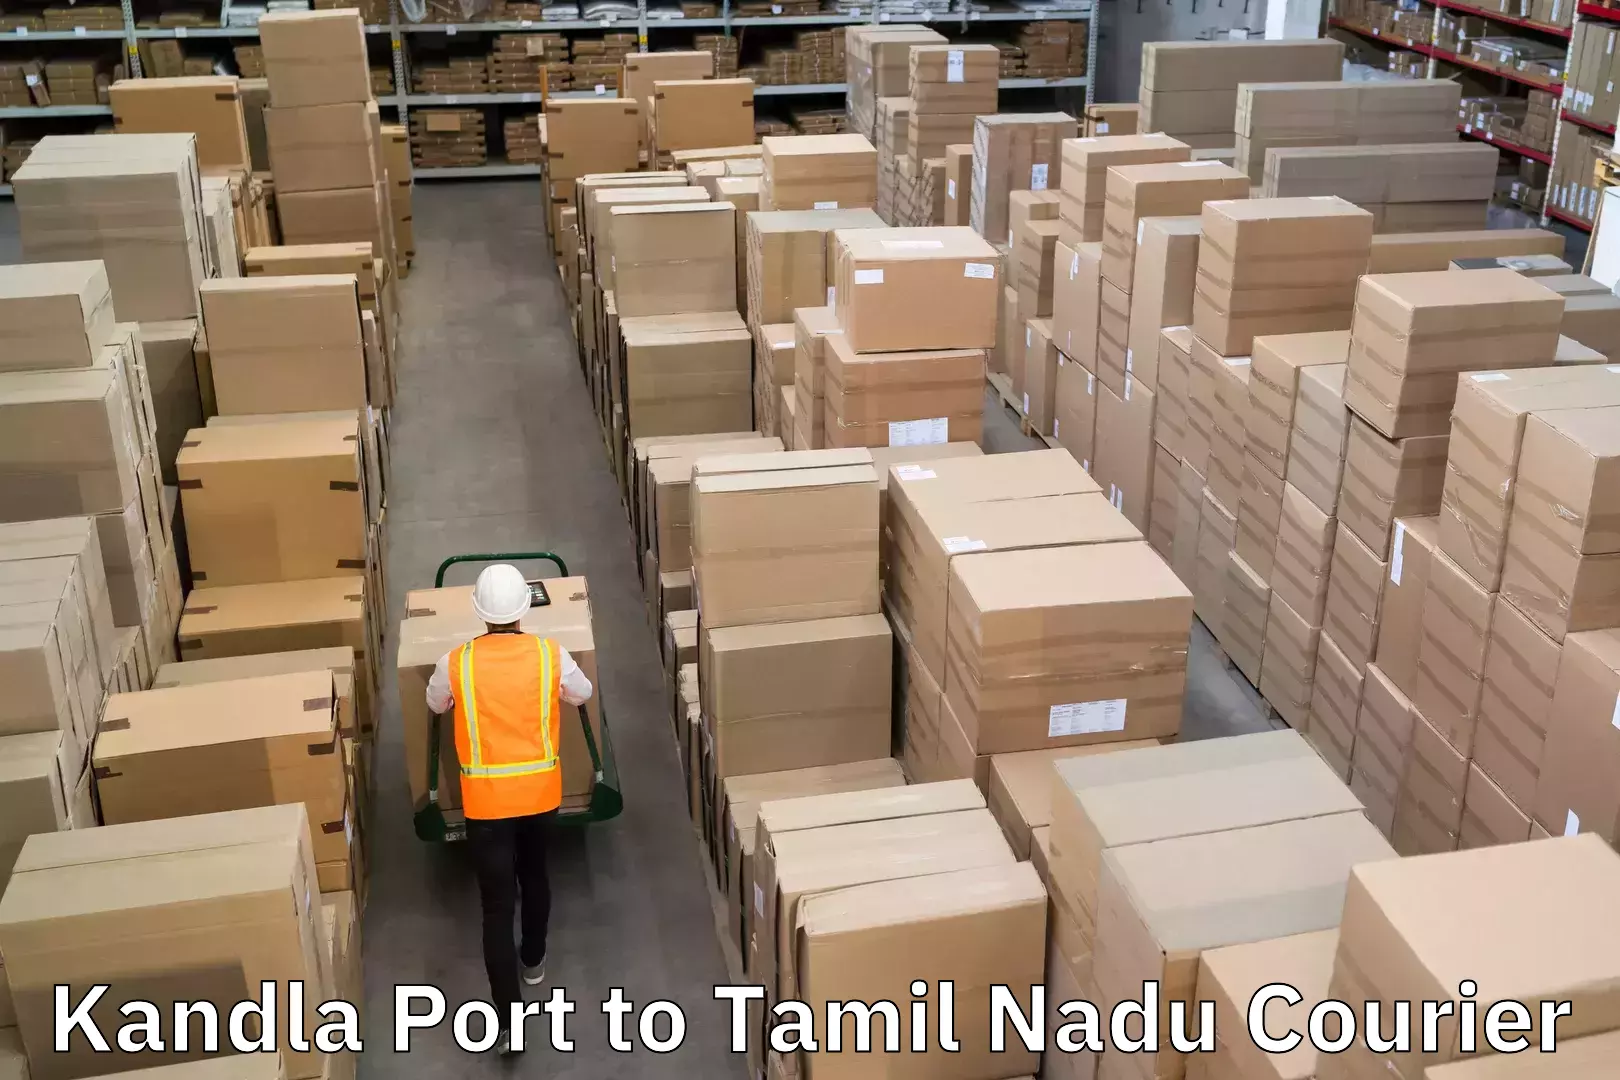 Business delivery service Kandla Port to Tamil Nadu